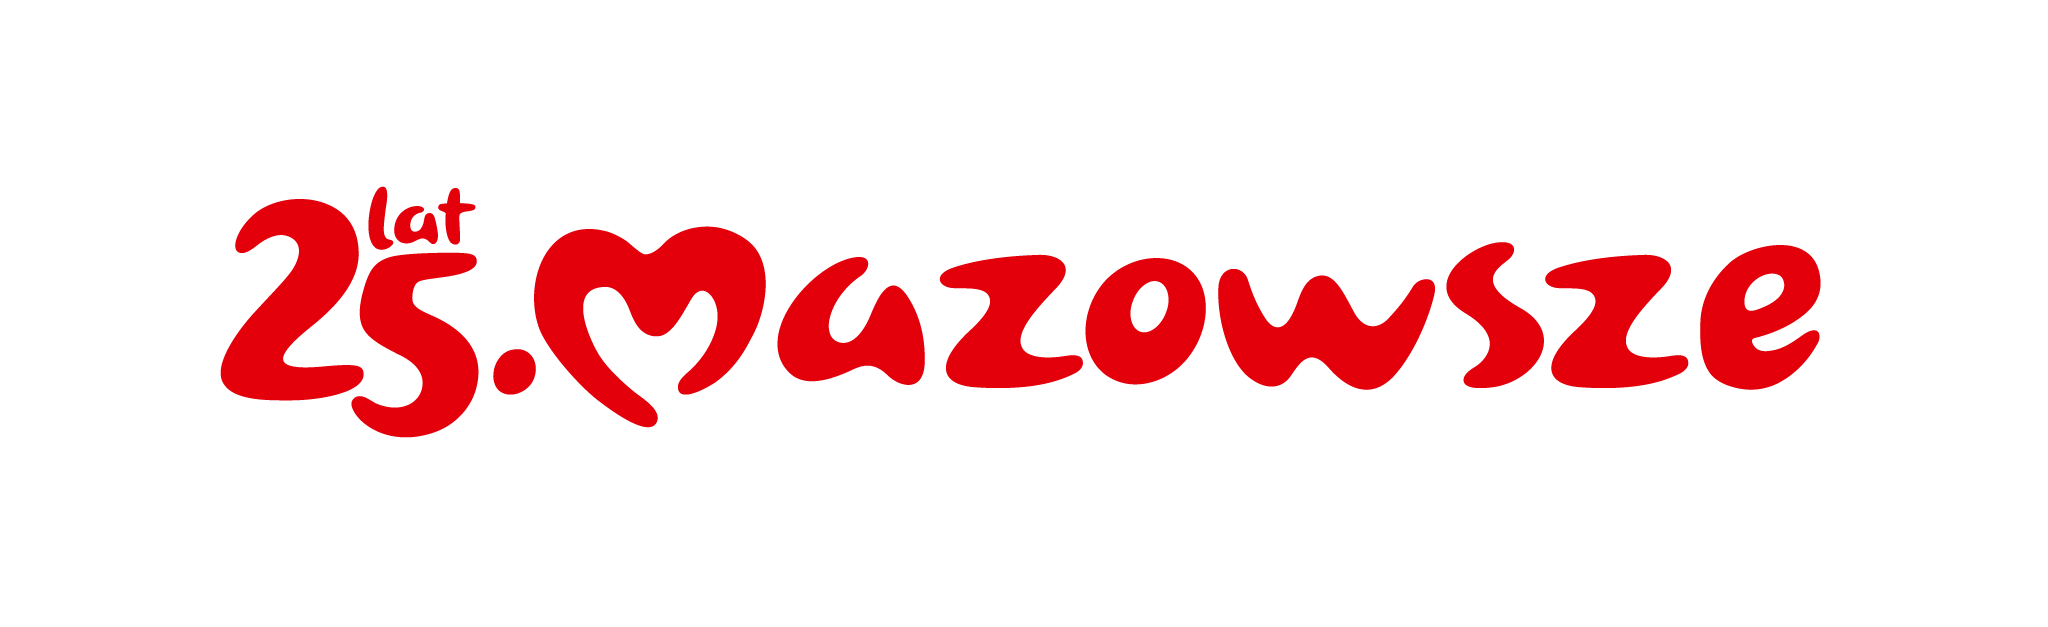 Logo "25 lat Mazowsze".